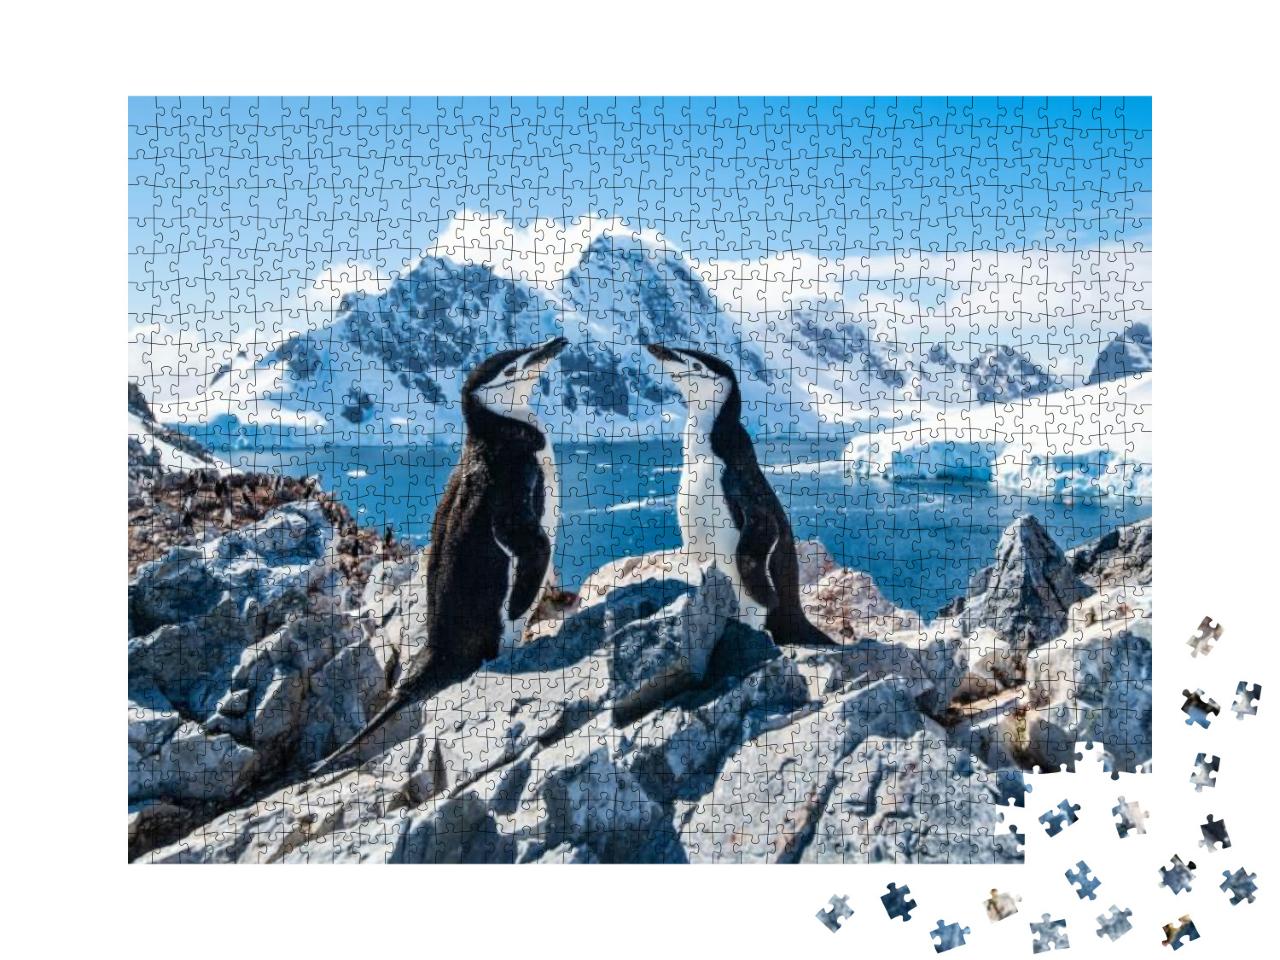 Puzzle 1000 Teile „Zügelpinguin, Antarktis, Januar 2019“